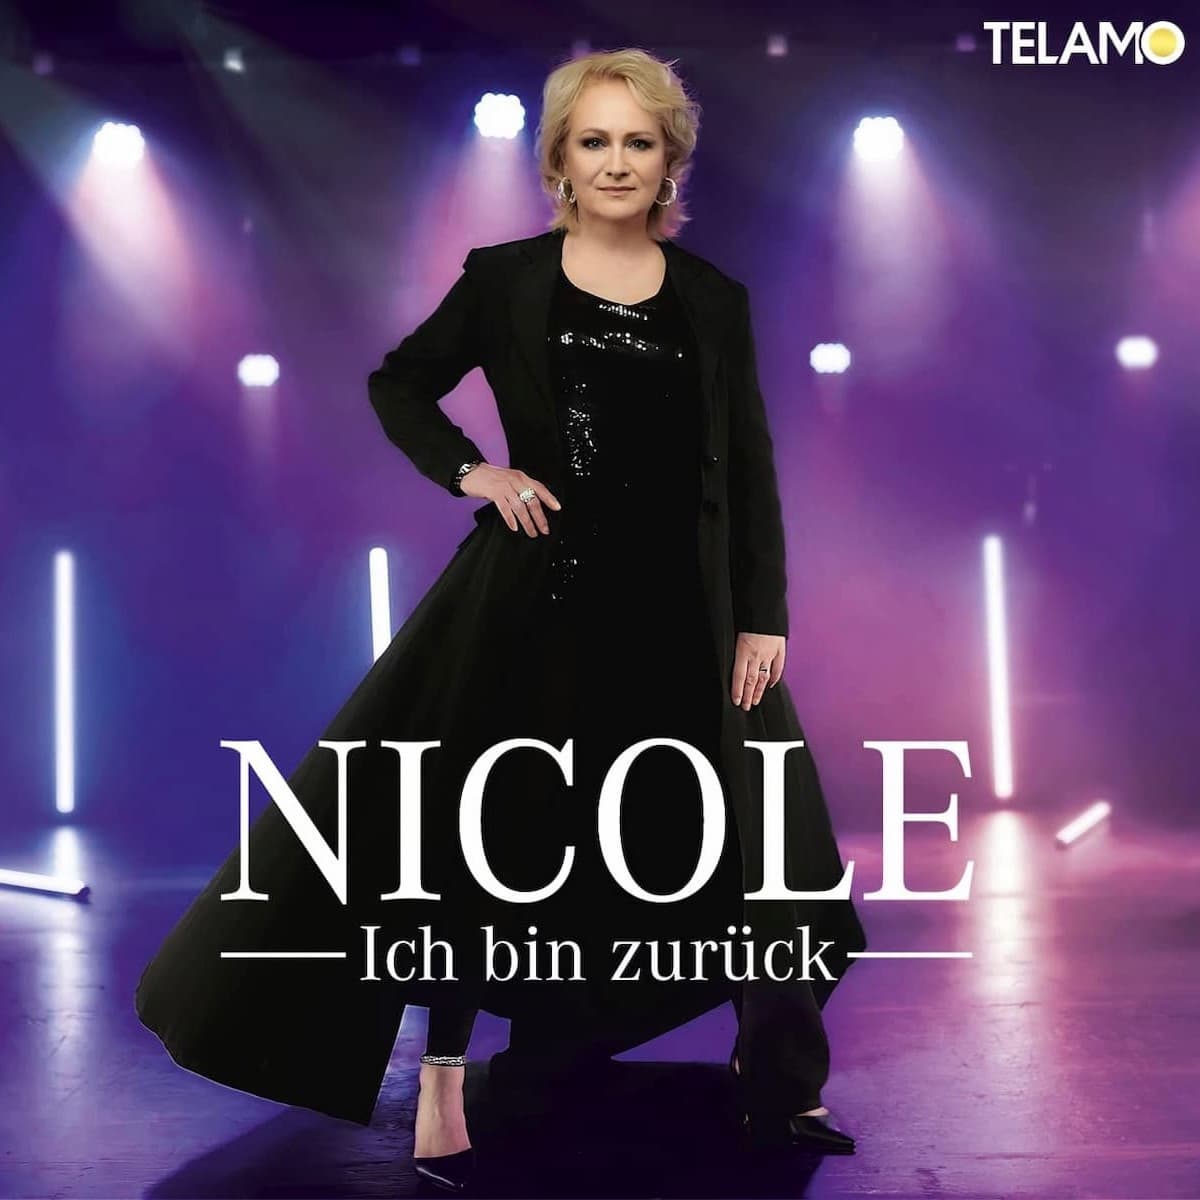 Nicole CD “Ich bin zurück” 2022